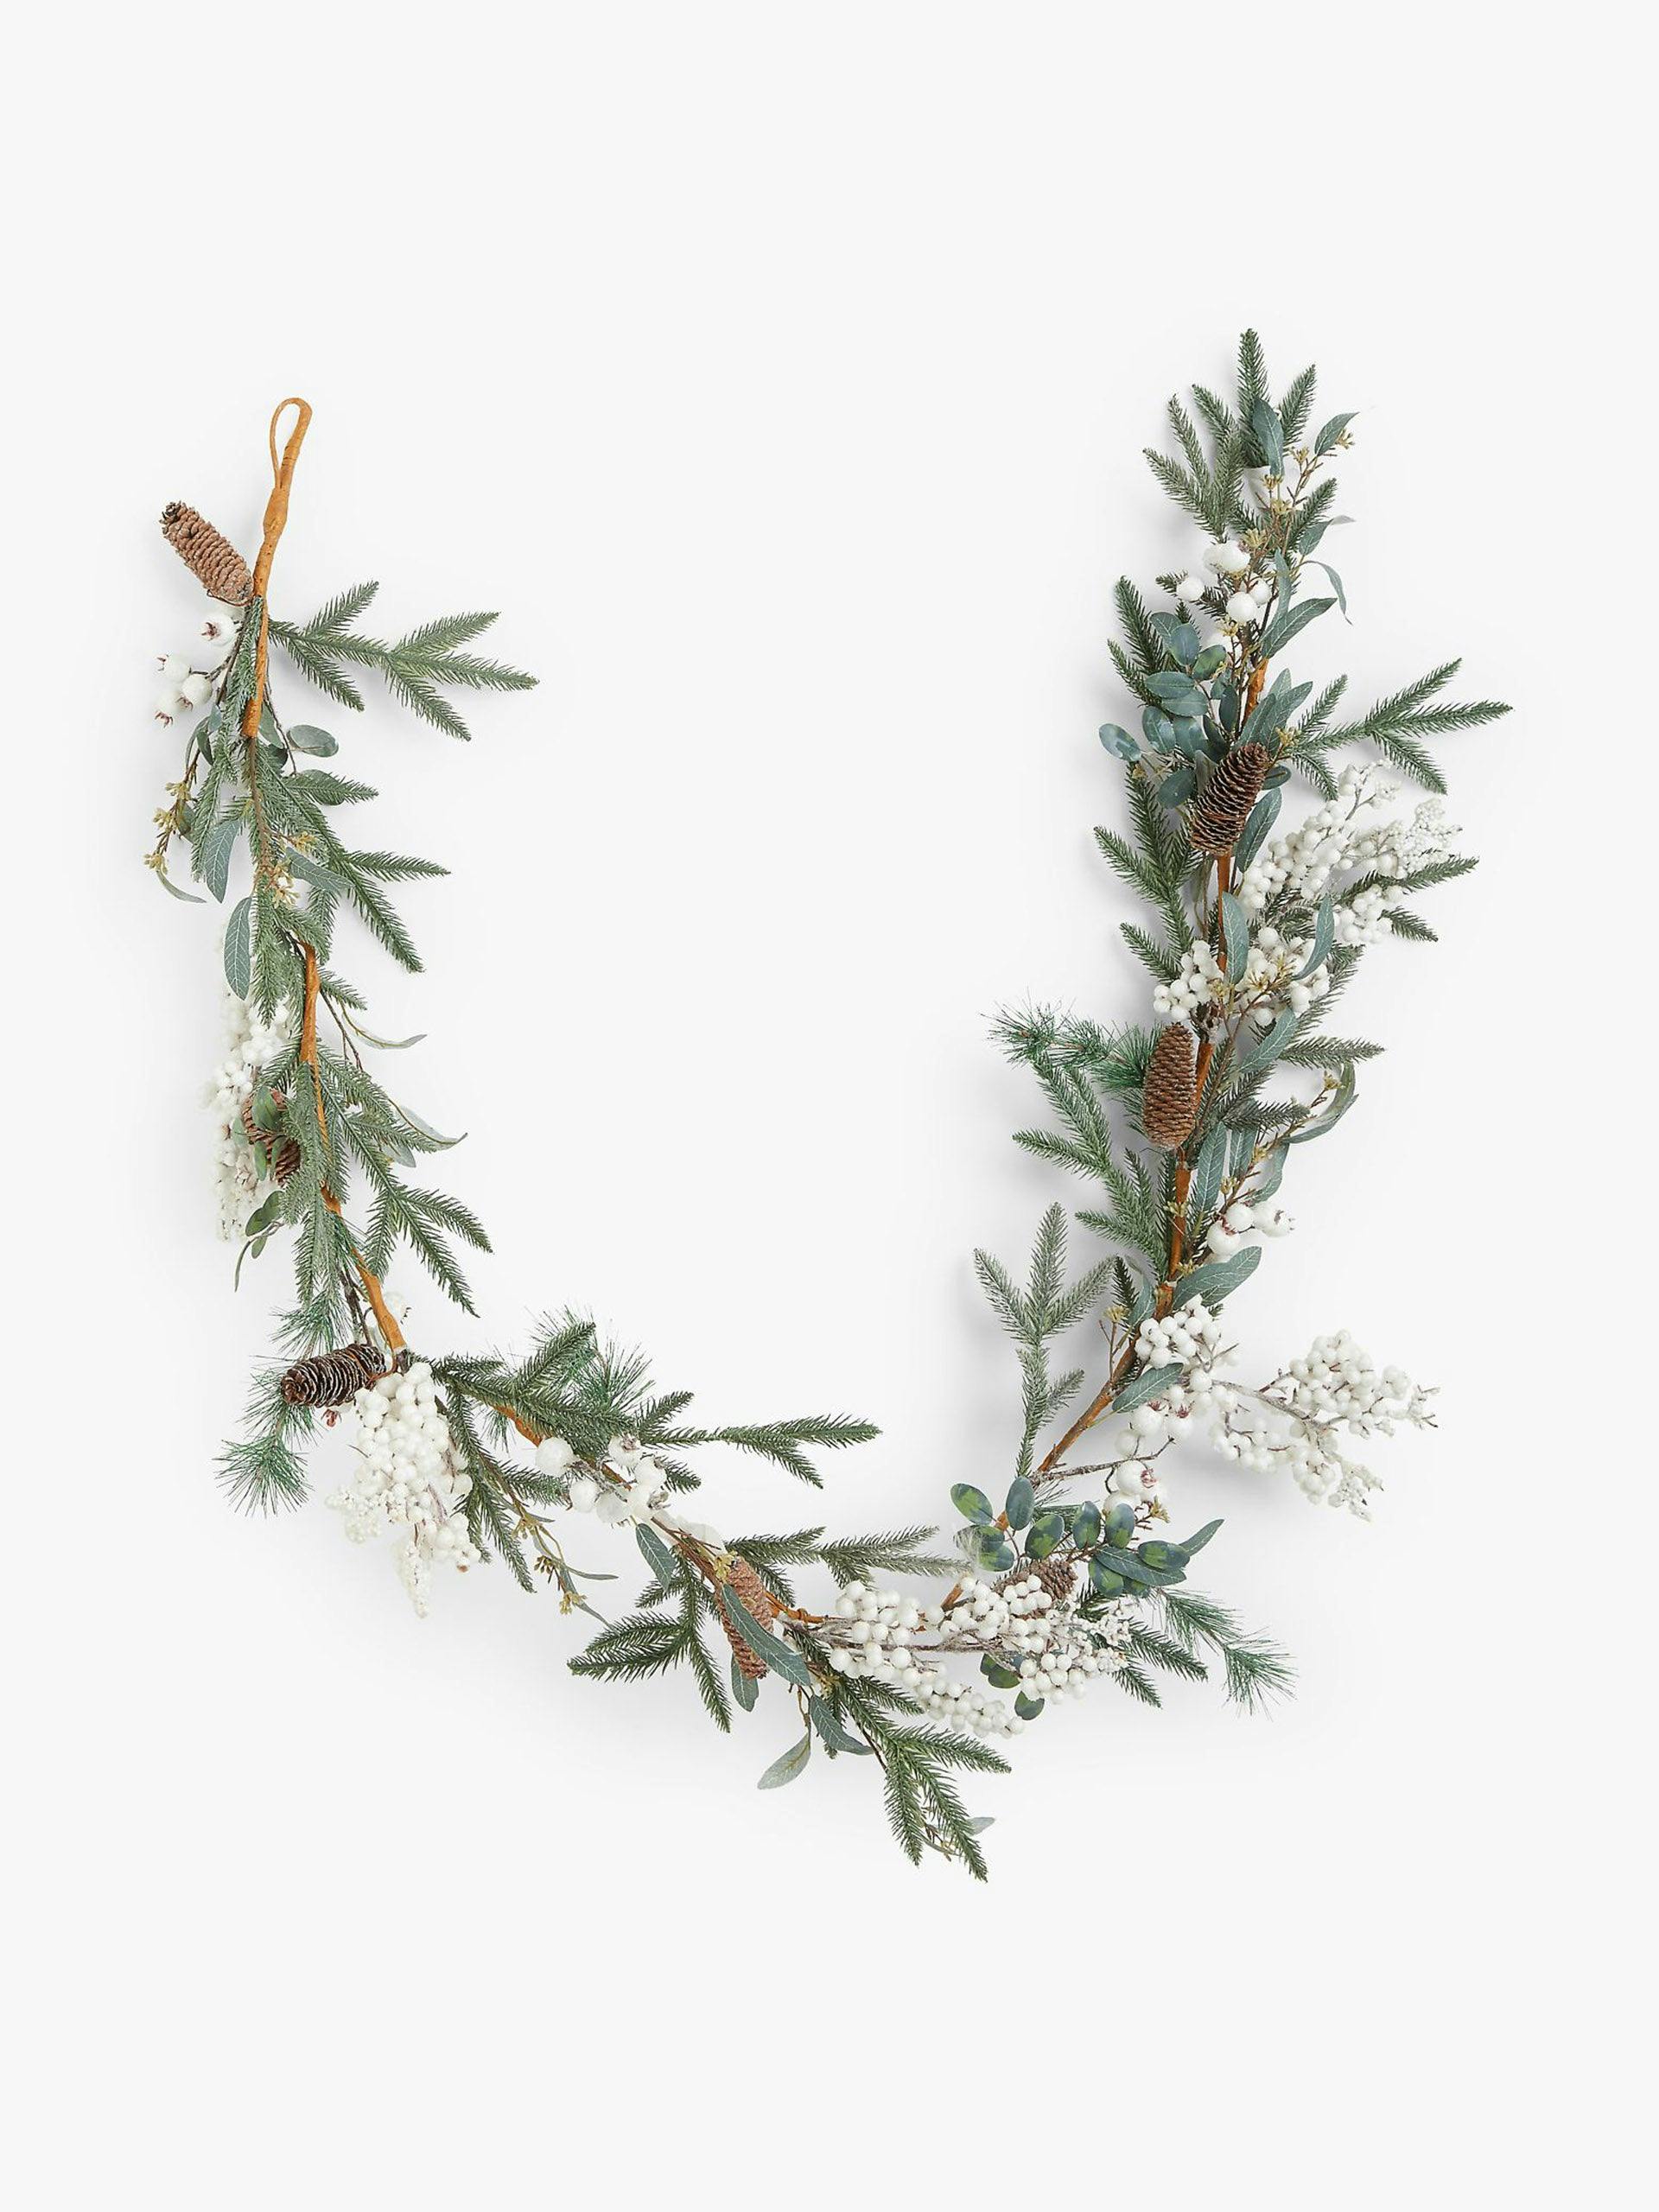 Pine and Mistletoe garland